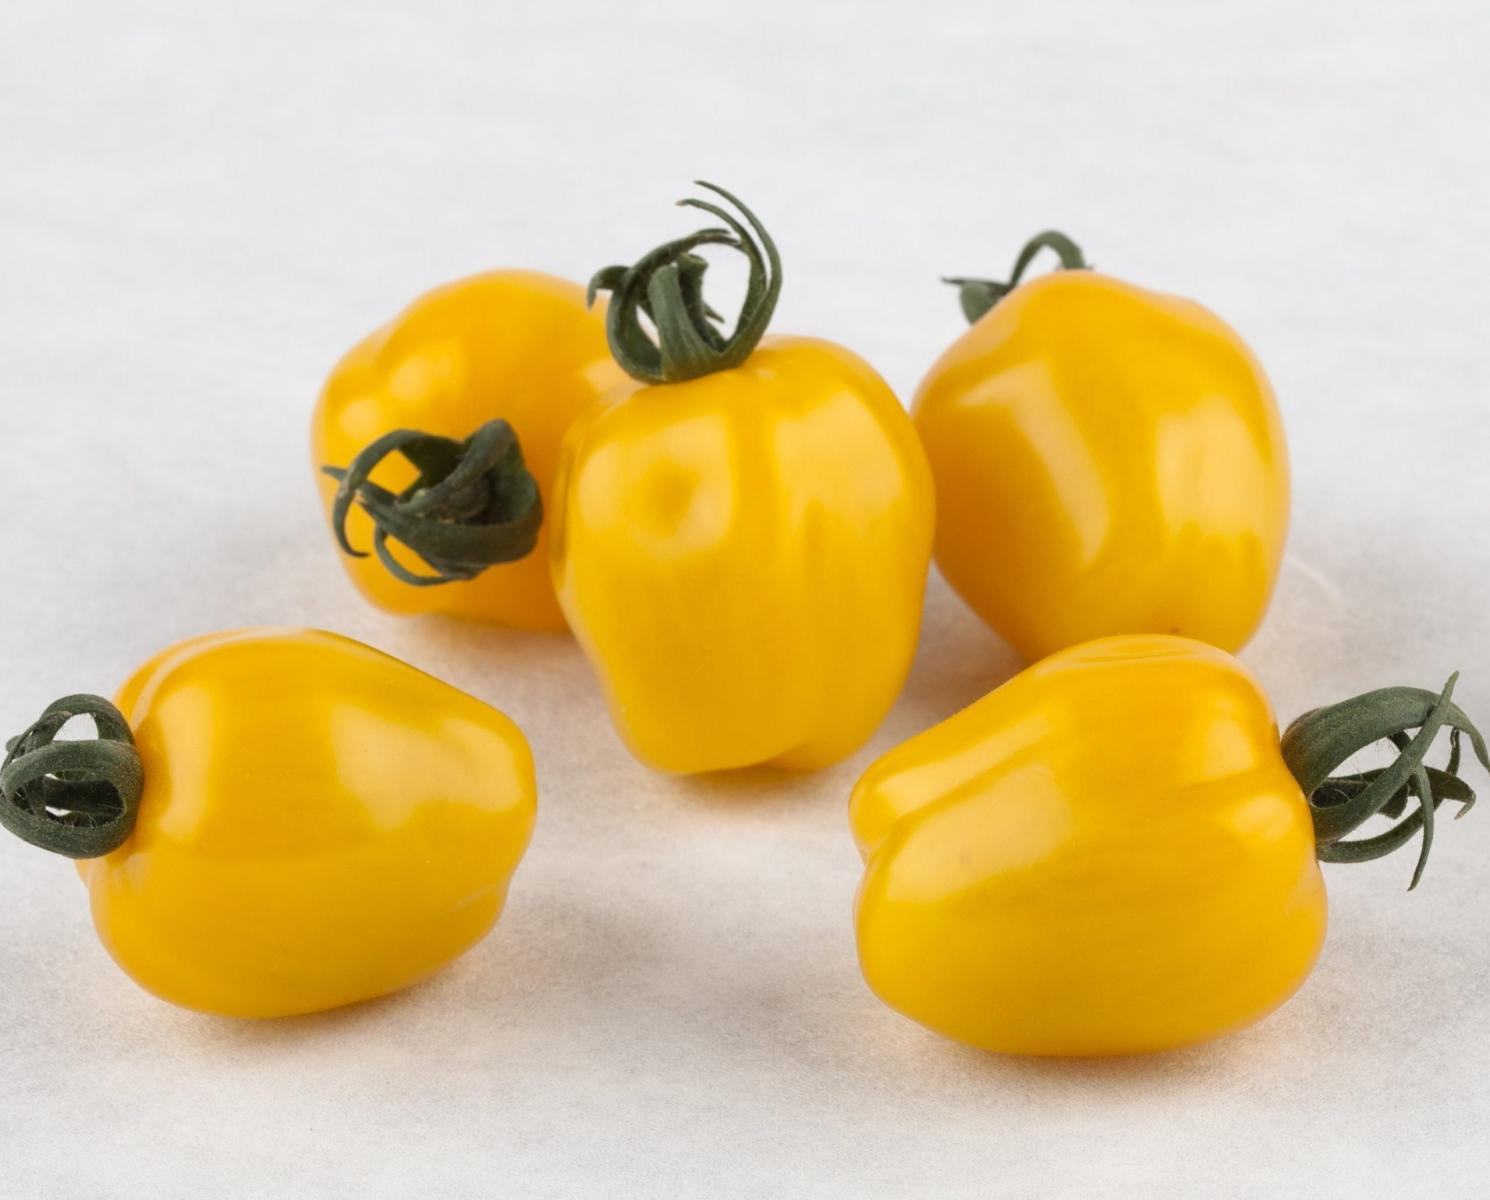 Image of 'Apple Yellow' tomato. 